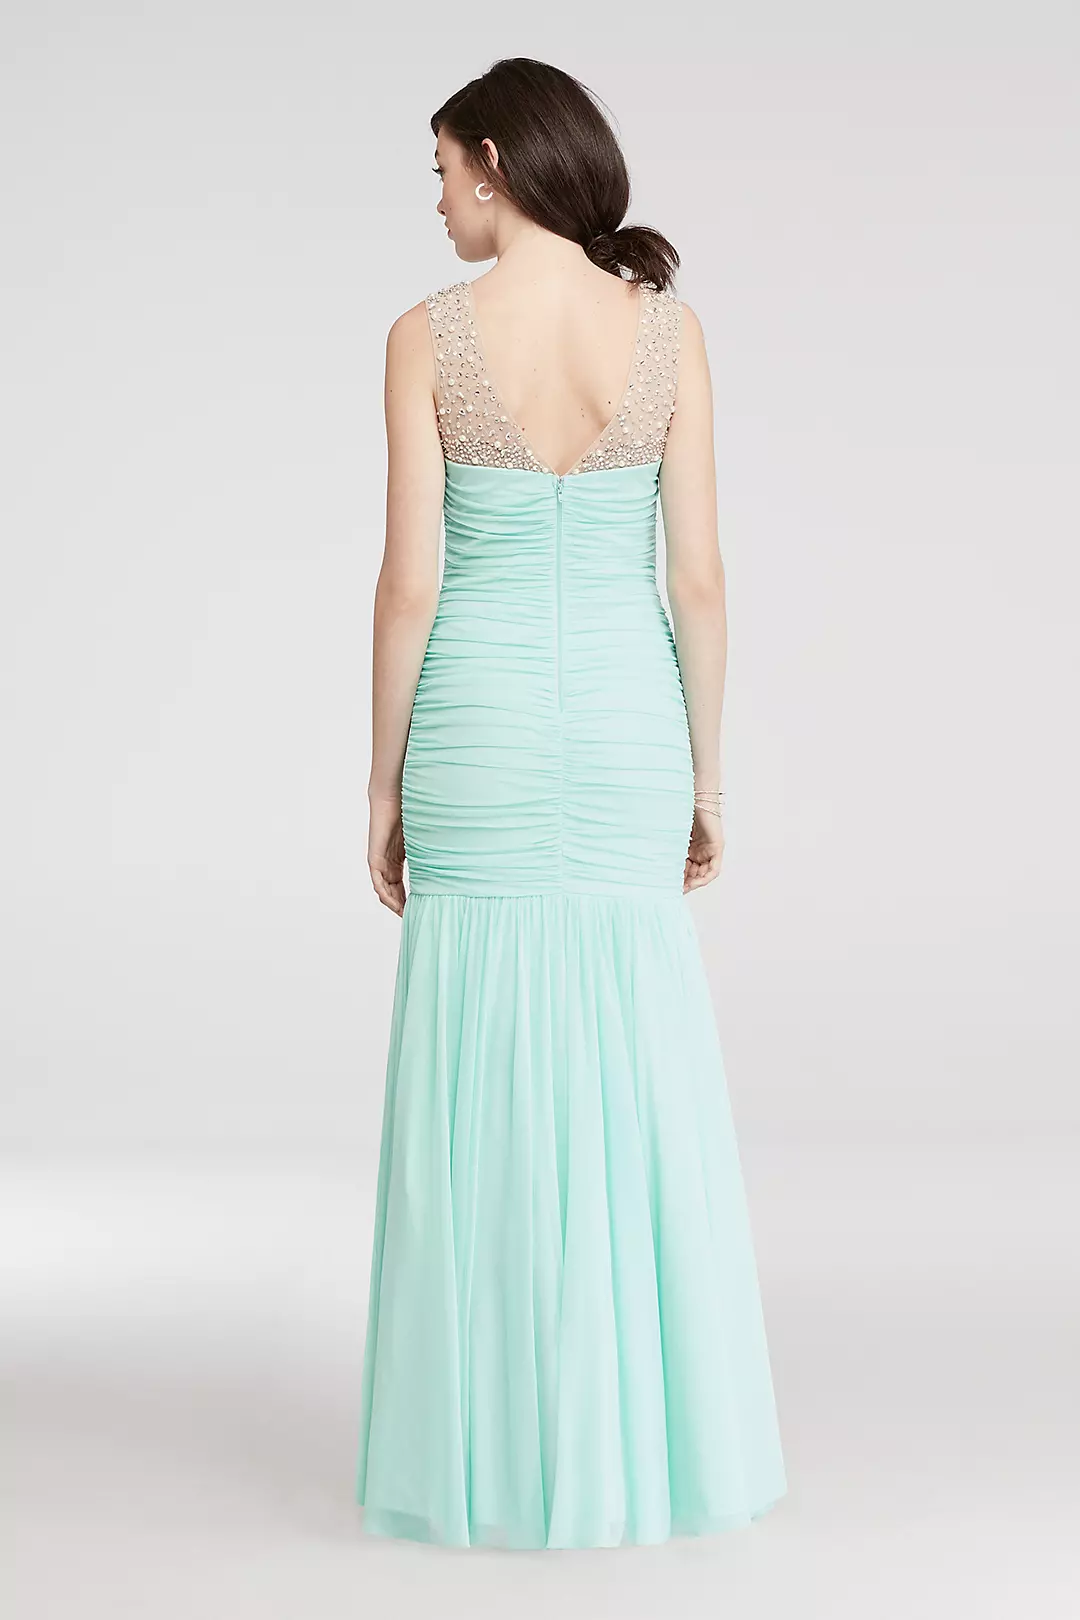 Mermaid Prom Dress with Beaded Illusion Tank Image 2